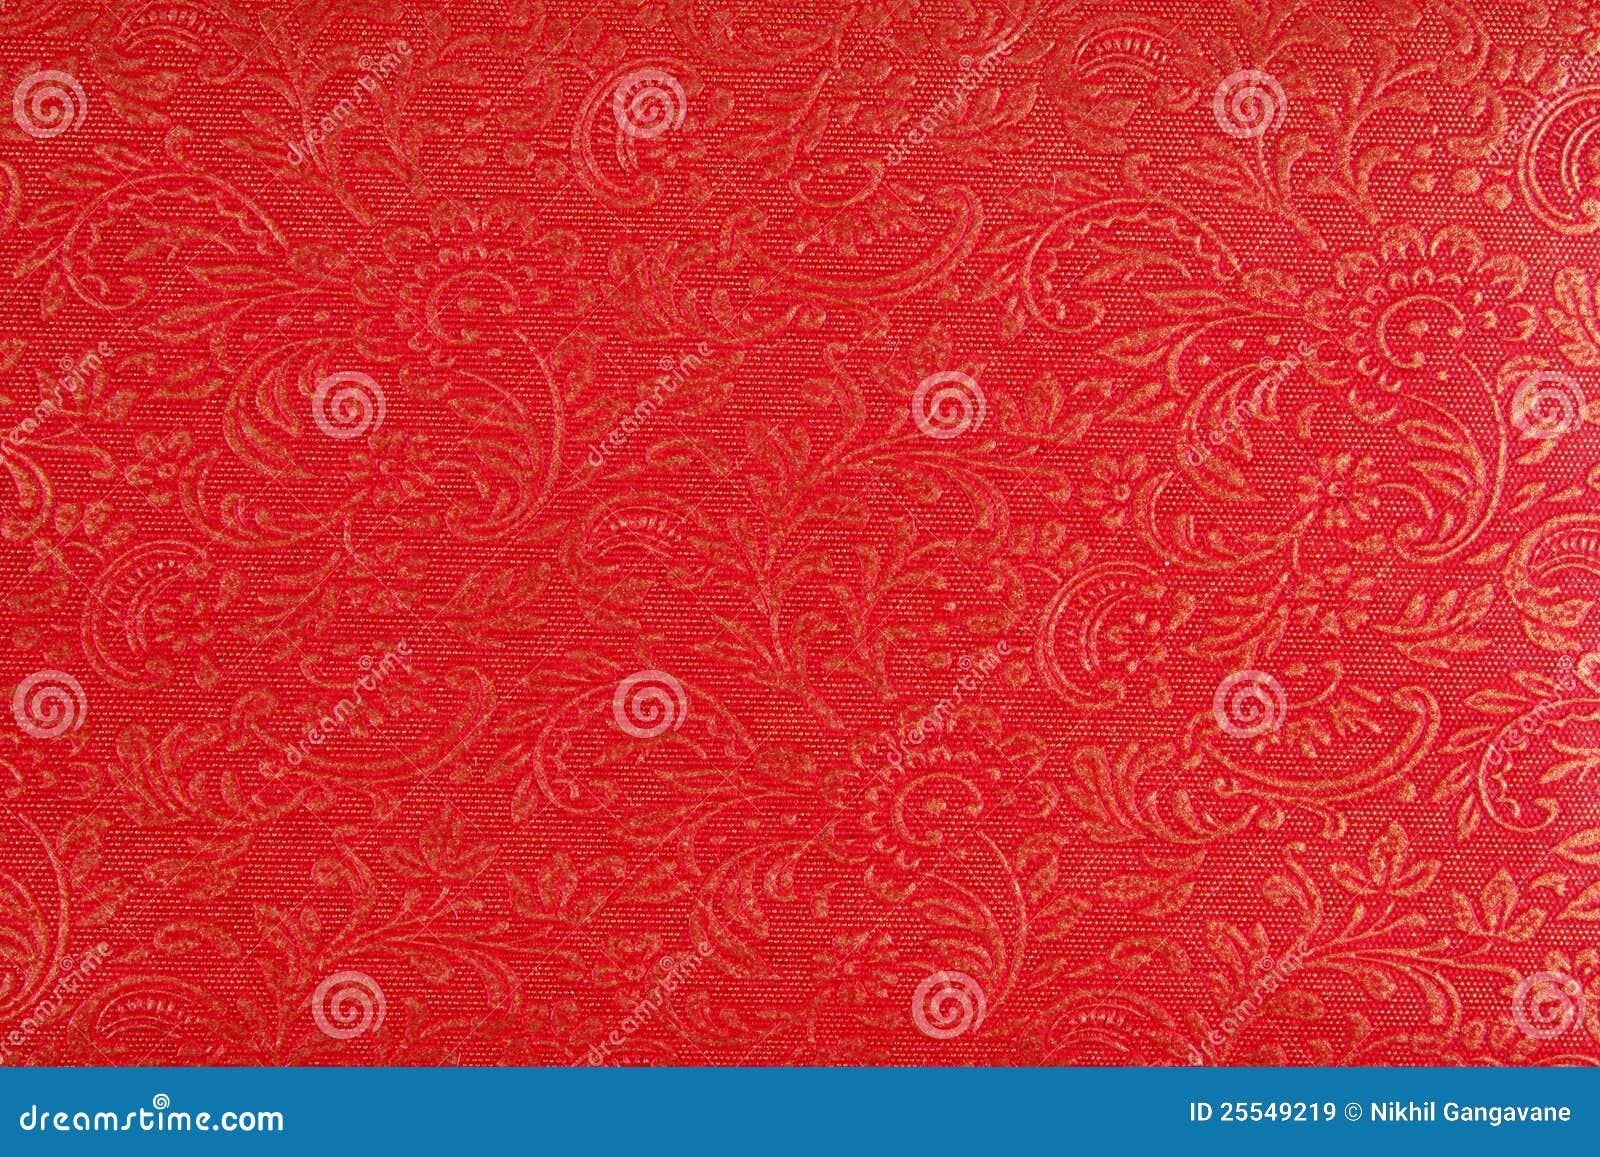 red ethnic fabric 